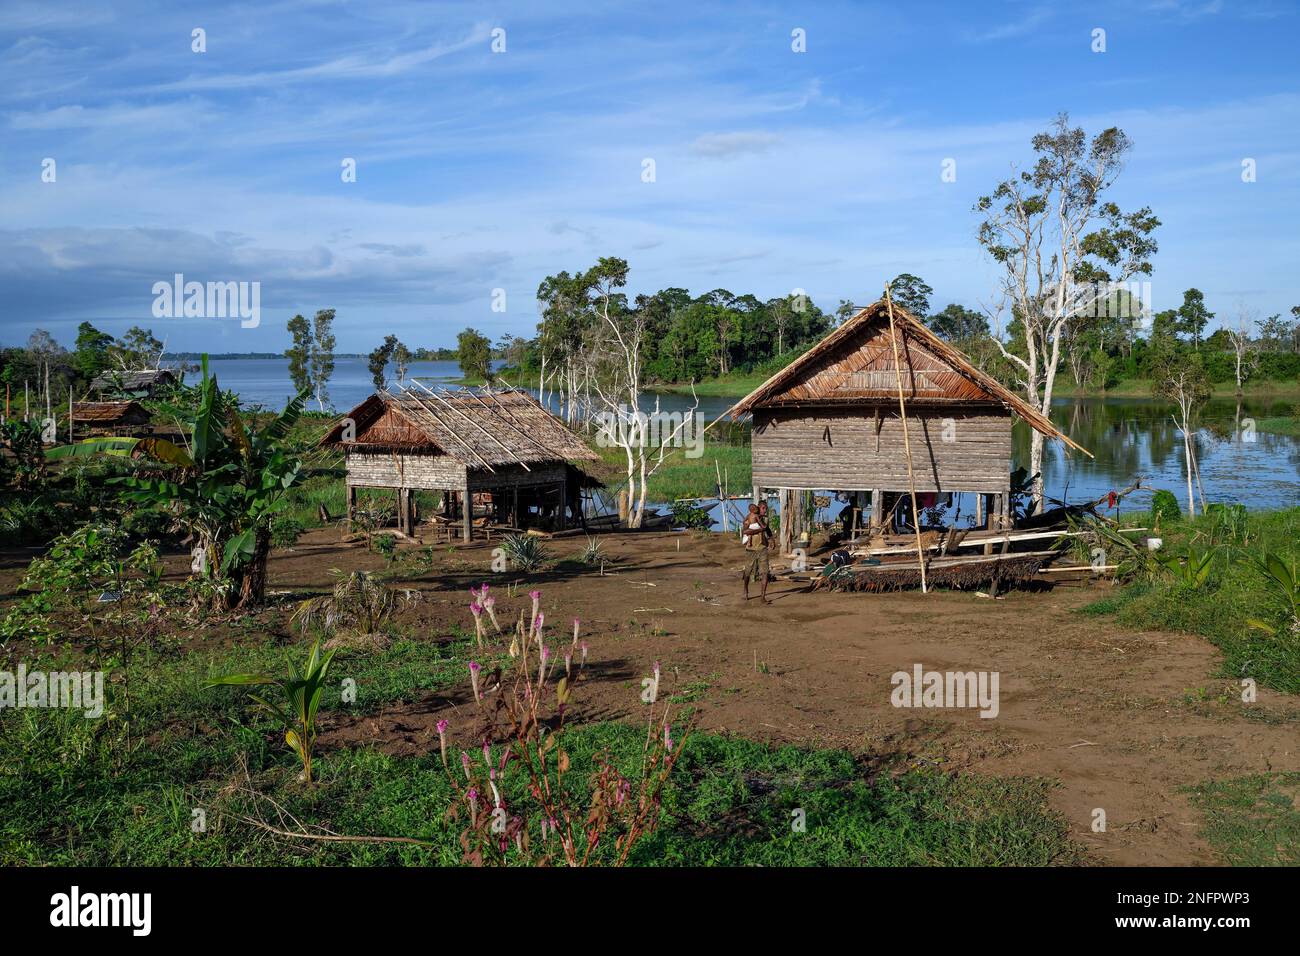 Hütte im Dorf Botokom, Botoa Island, Lake Murray, westliche Provinz, Papua-Neuguinea Stockfoto